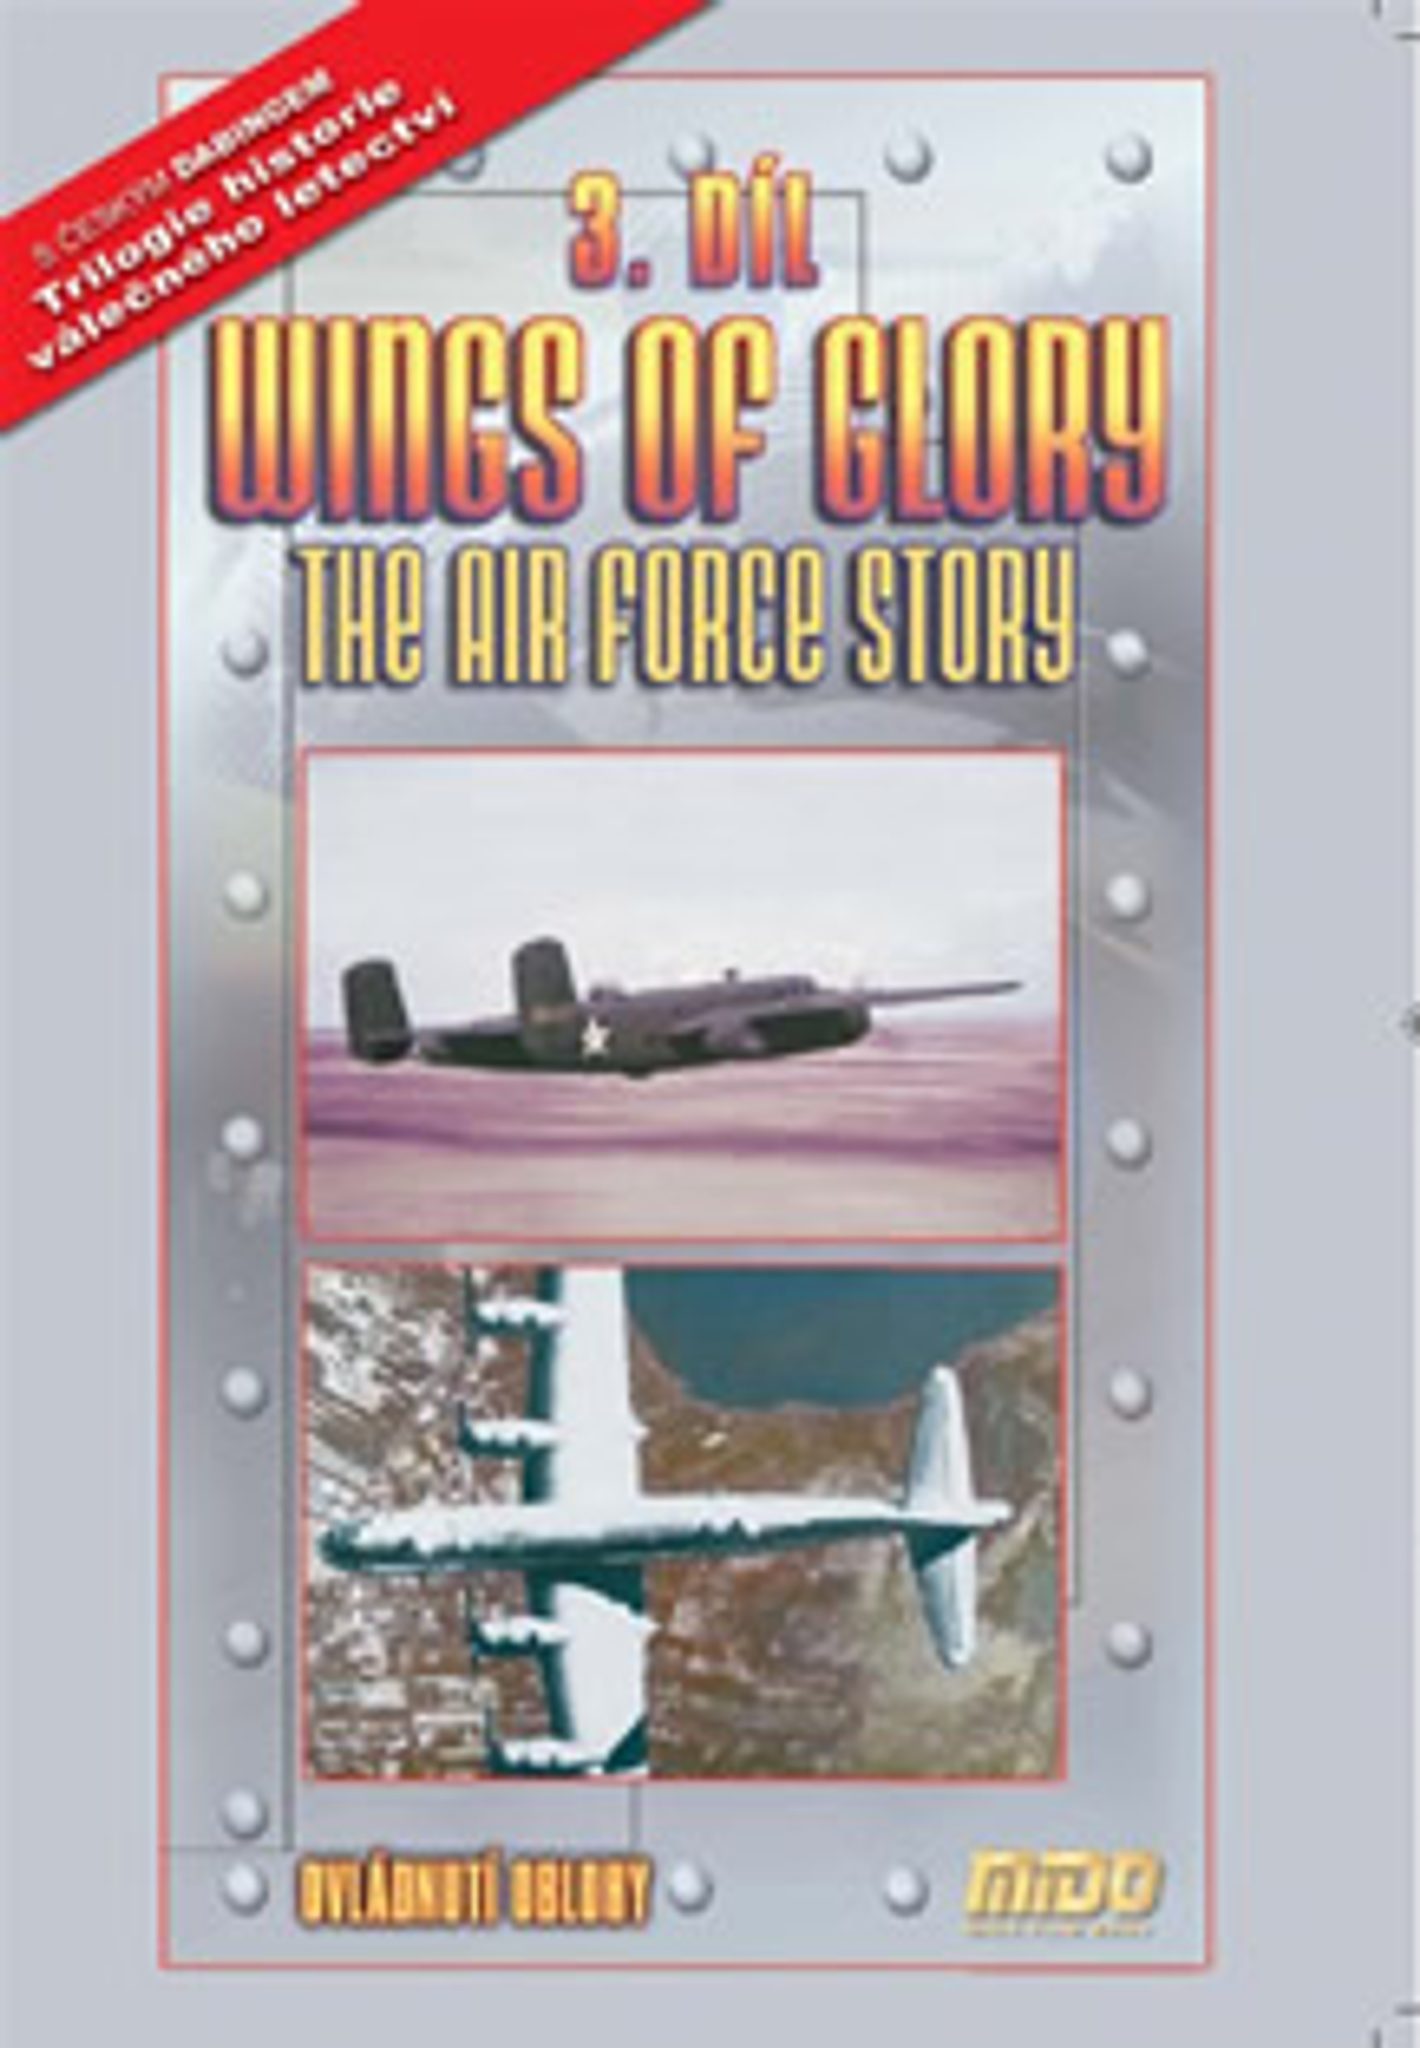 DVD Wings of Glory III: Ovldnut oblohy (Slim box) - Kliknutm na obrzek zavete